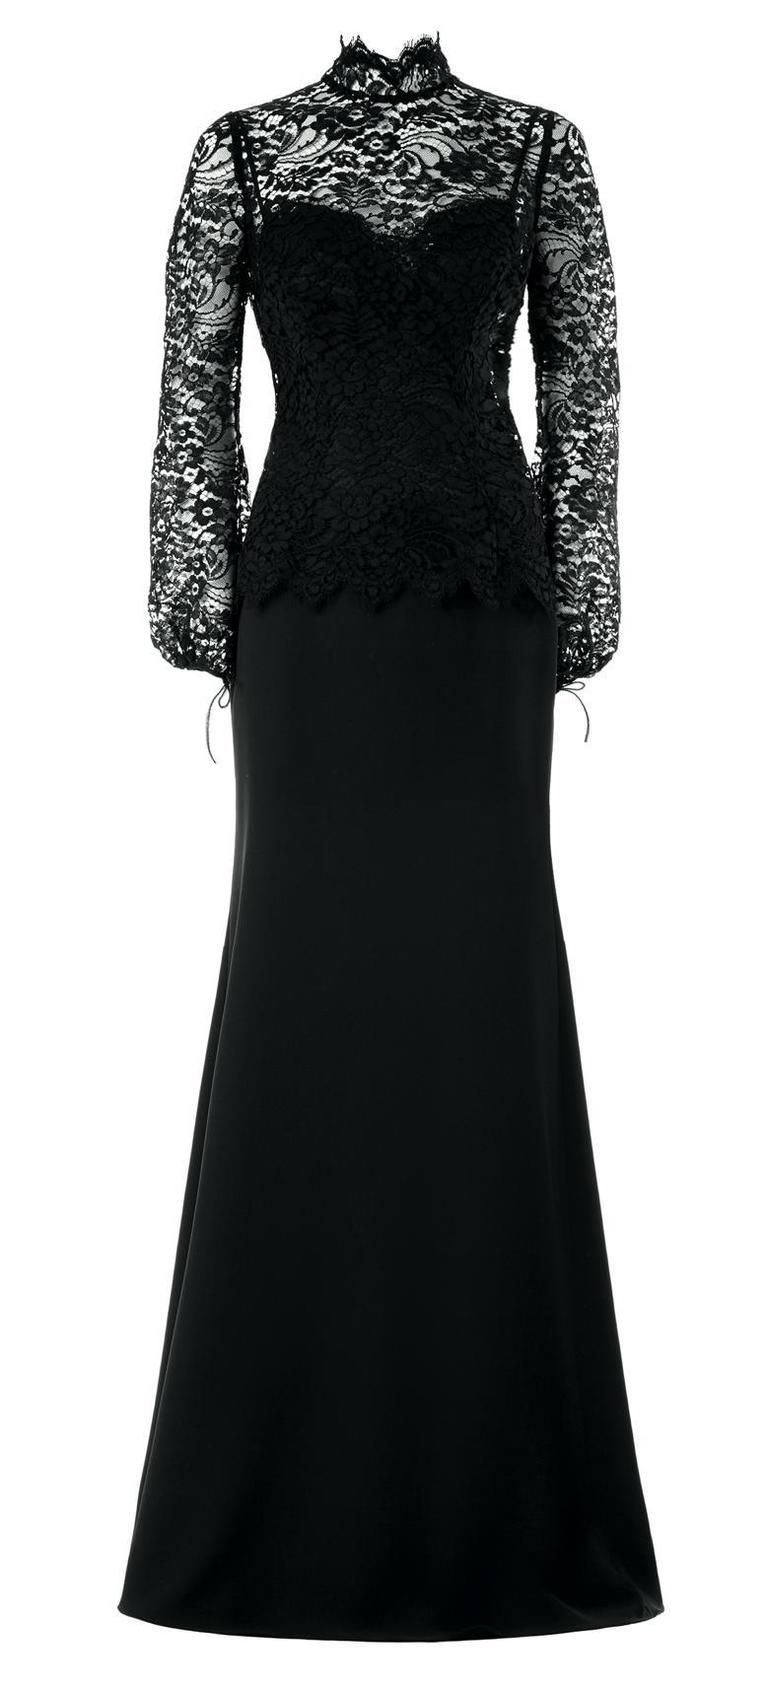 Dress, Formal wear, Style, Day dress, One-piece garment, Fashion, Neck, Black, Little black dress, Cocktail dress, 